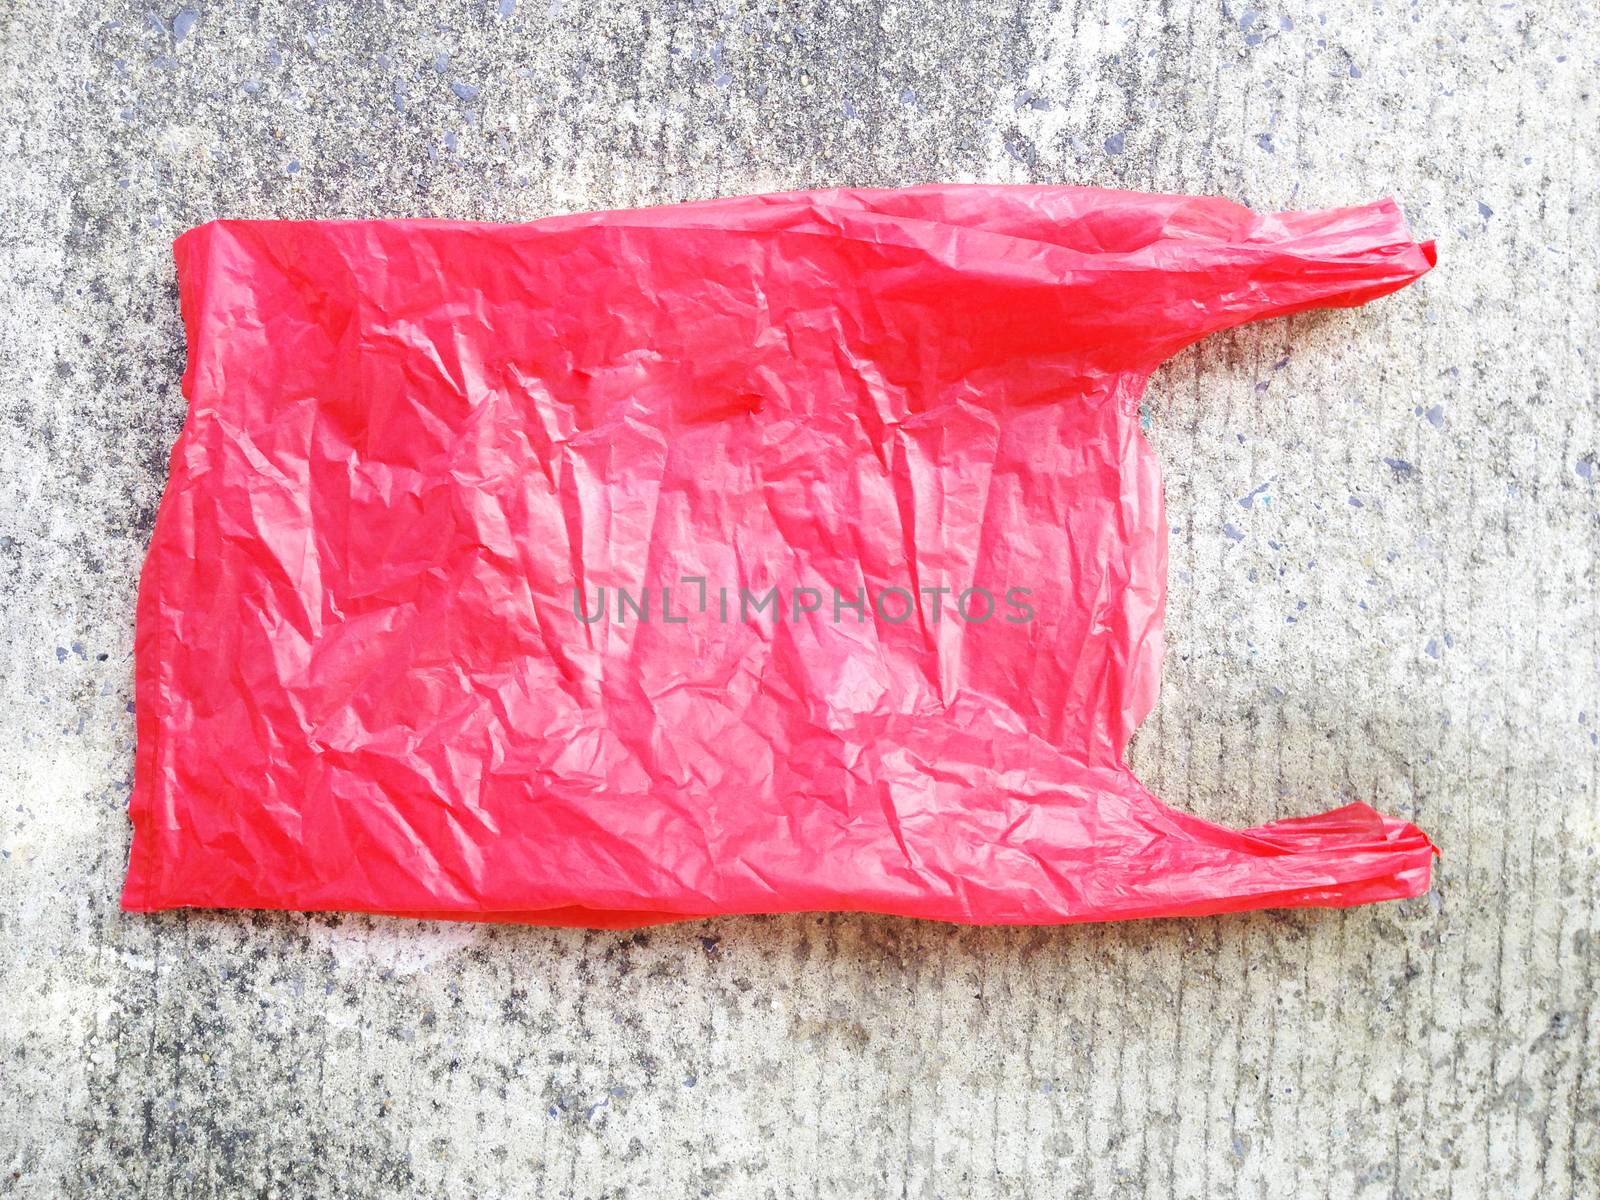 plastic bag on cement floor by Bowonpat